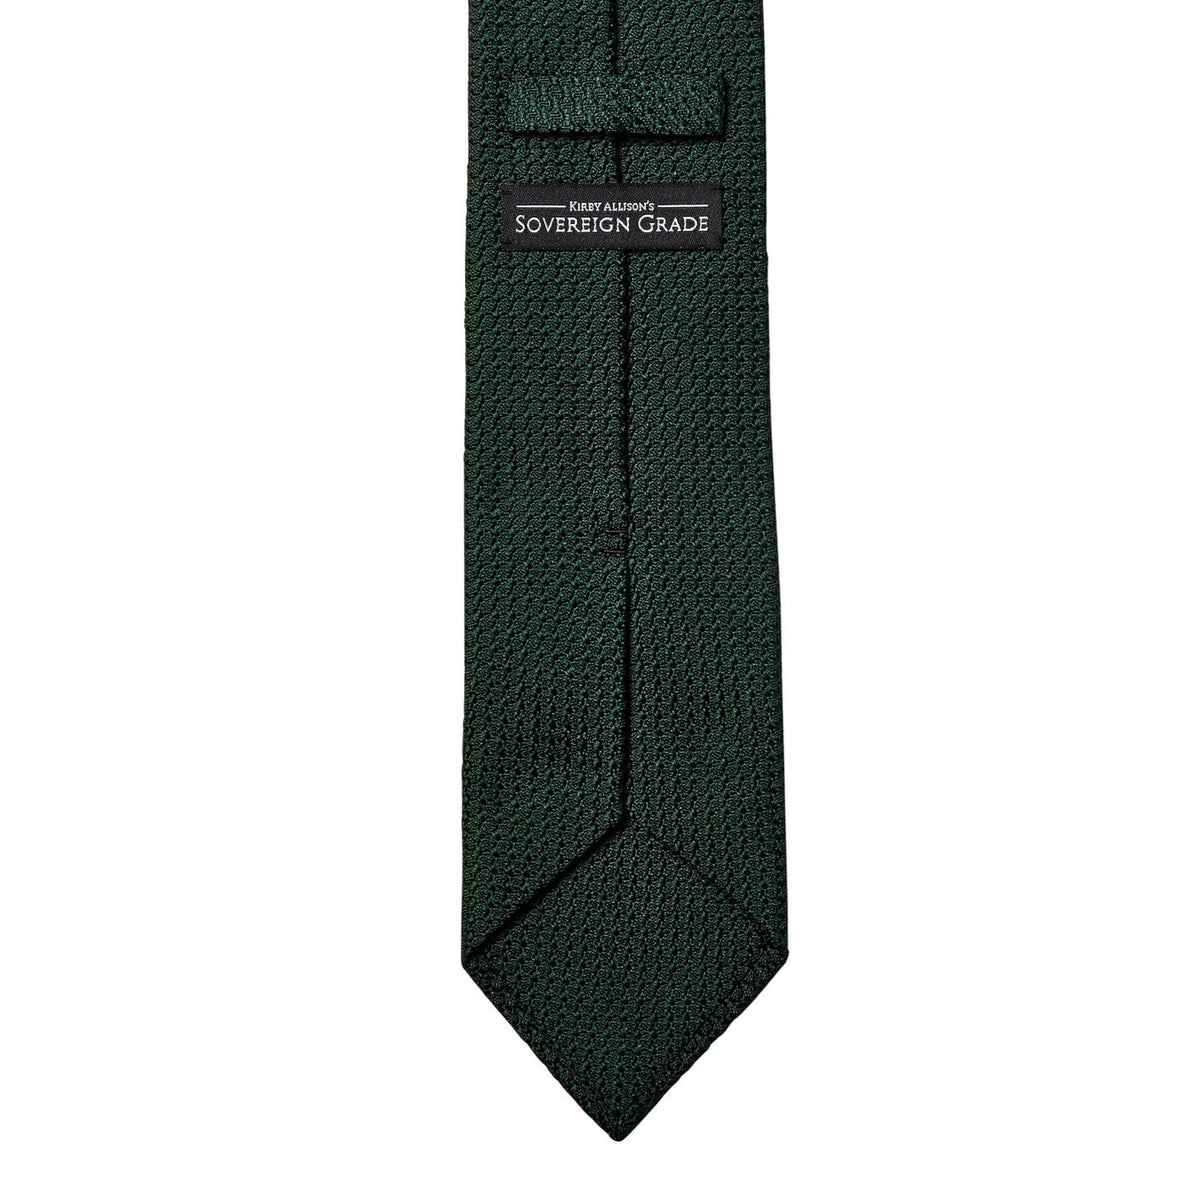 A Sovereign Grade Emerald Grenadine Grossa tie from KirbyAllison.com on a white background.